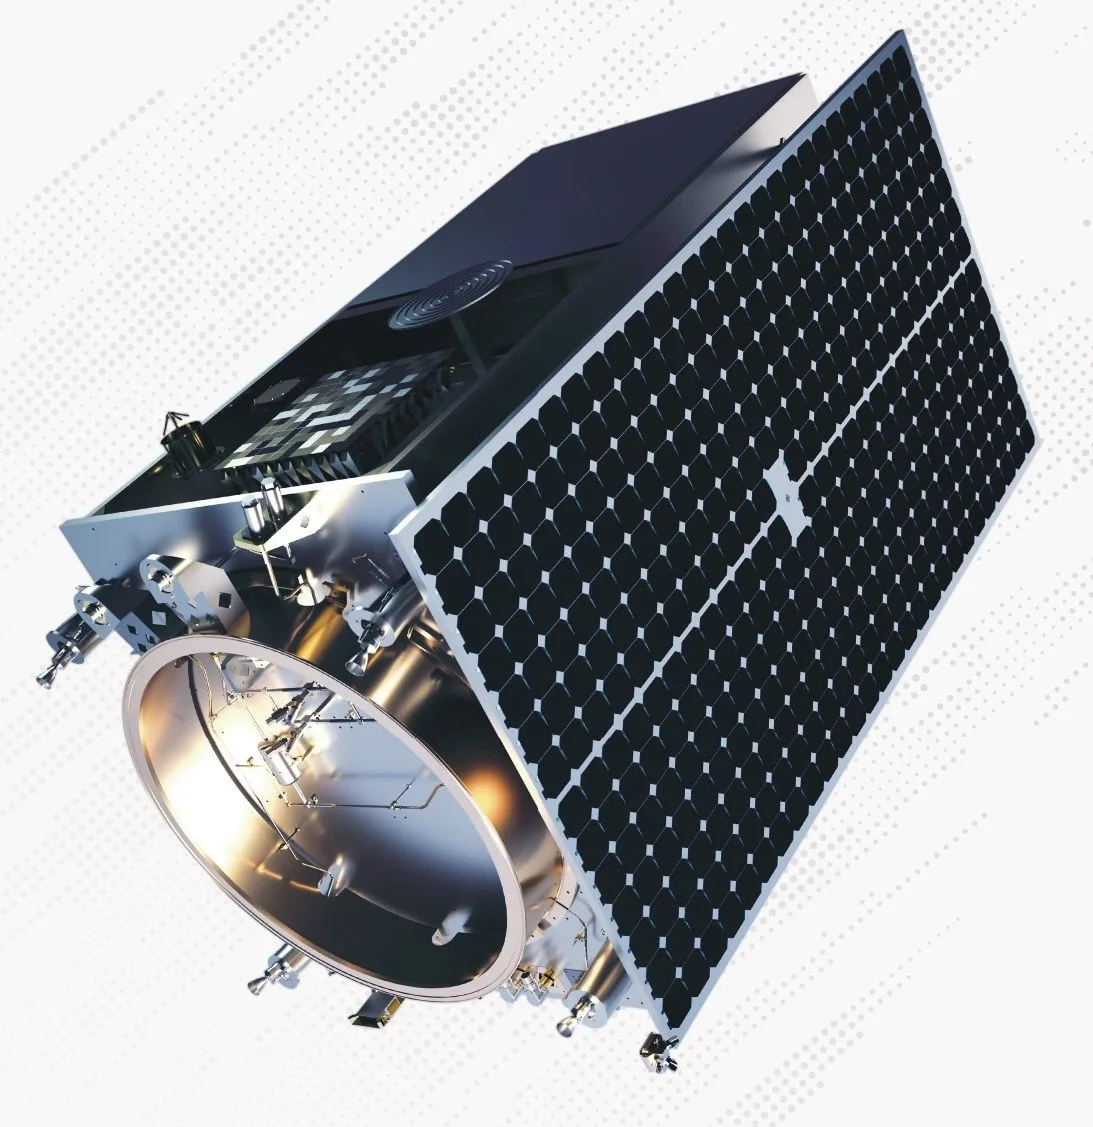 LM400 Technology Demonstrator spacecraft by Lockheed Martin